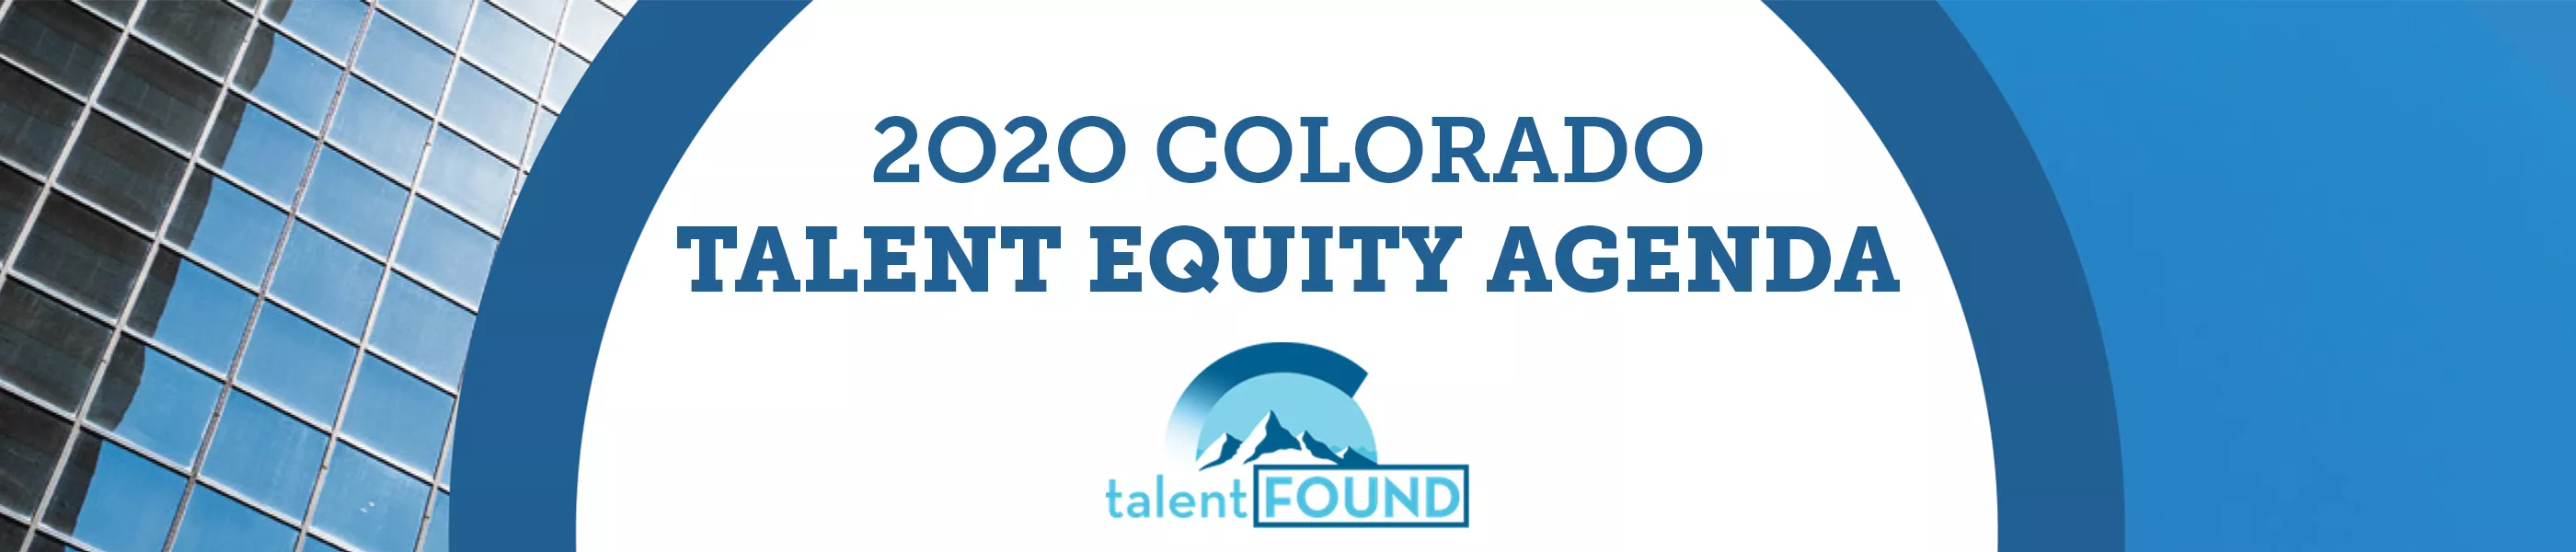 Colorado Talent Equity Agenda